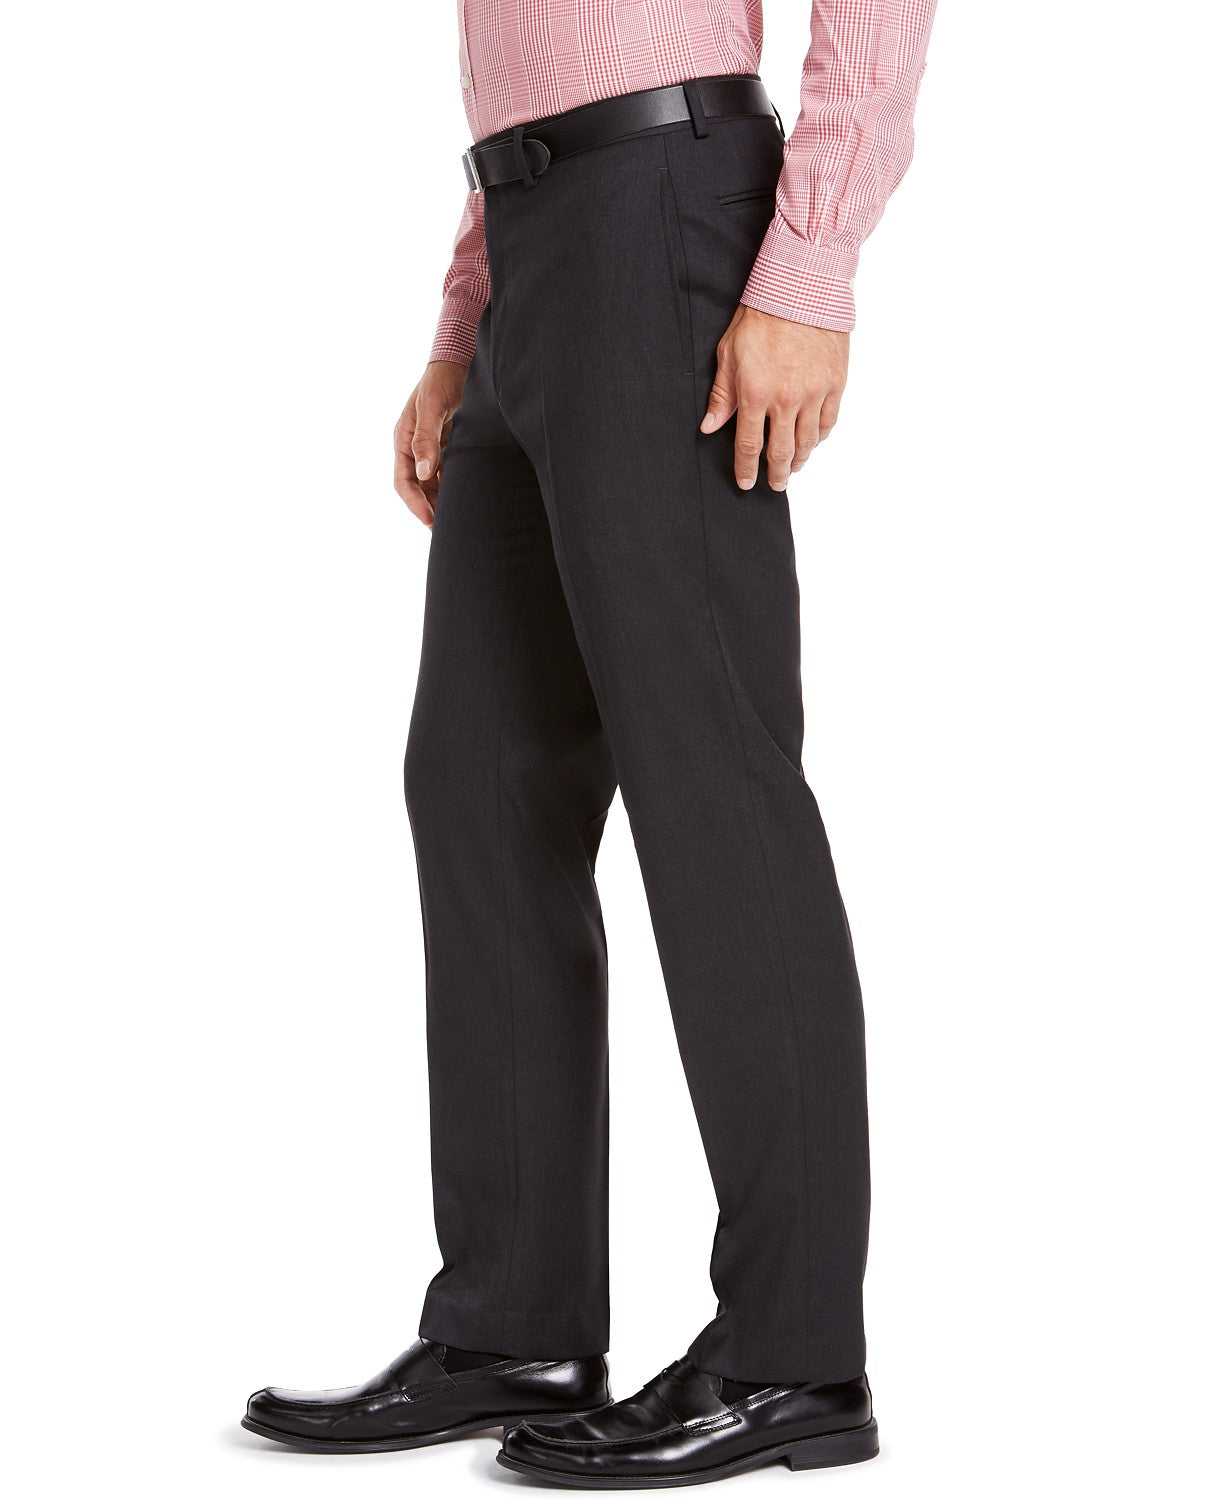 Izod Men's Dress Pants 38 X 30 Classic-Fit Charcoal Flat Front